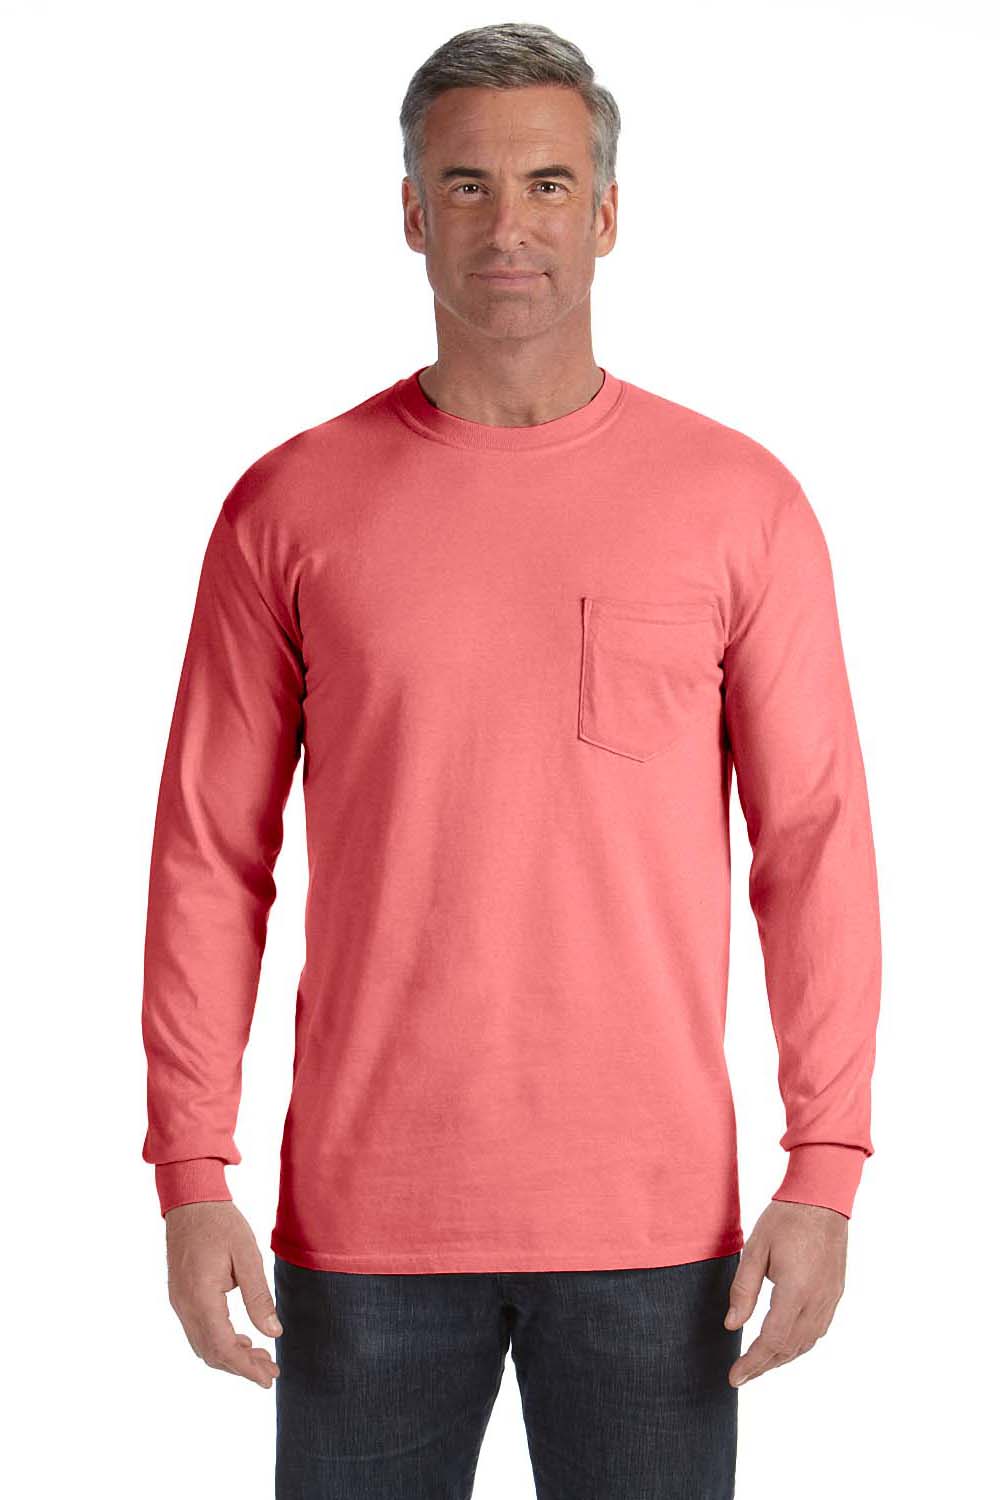 Comfort Colors C4410 Mens Long Sleeve Crewneck T-Shirt w/ Pocket Watermelon Pink Front